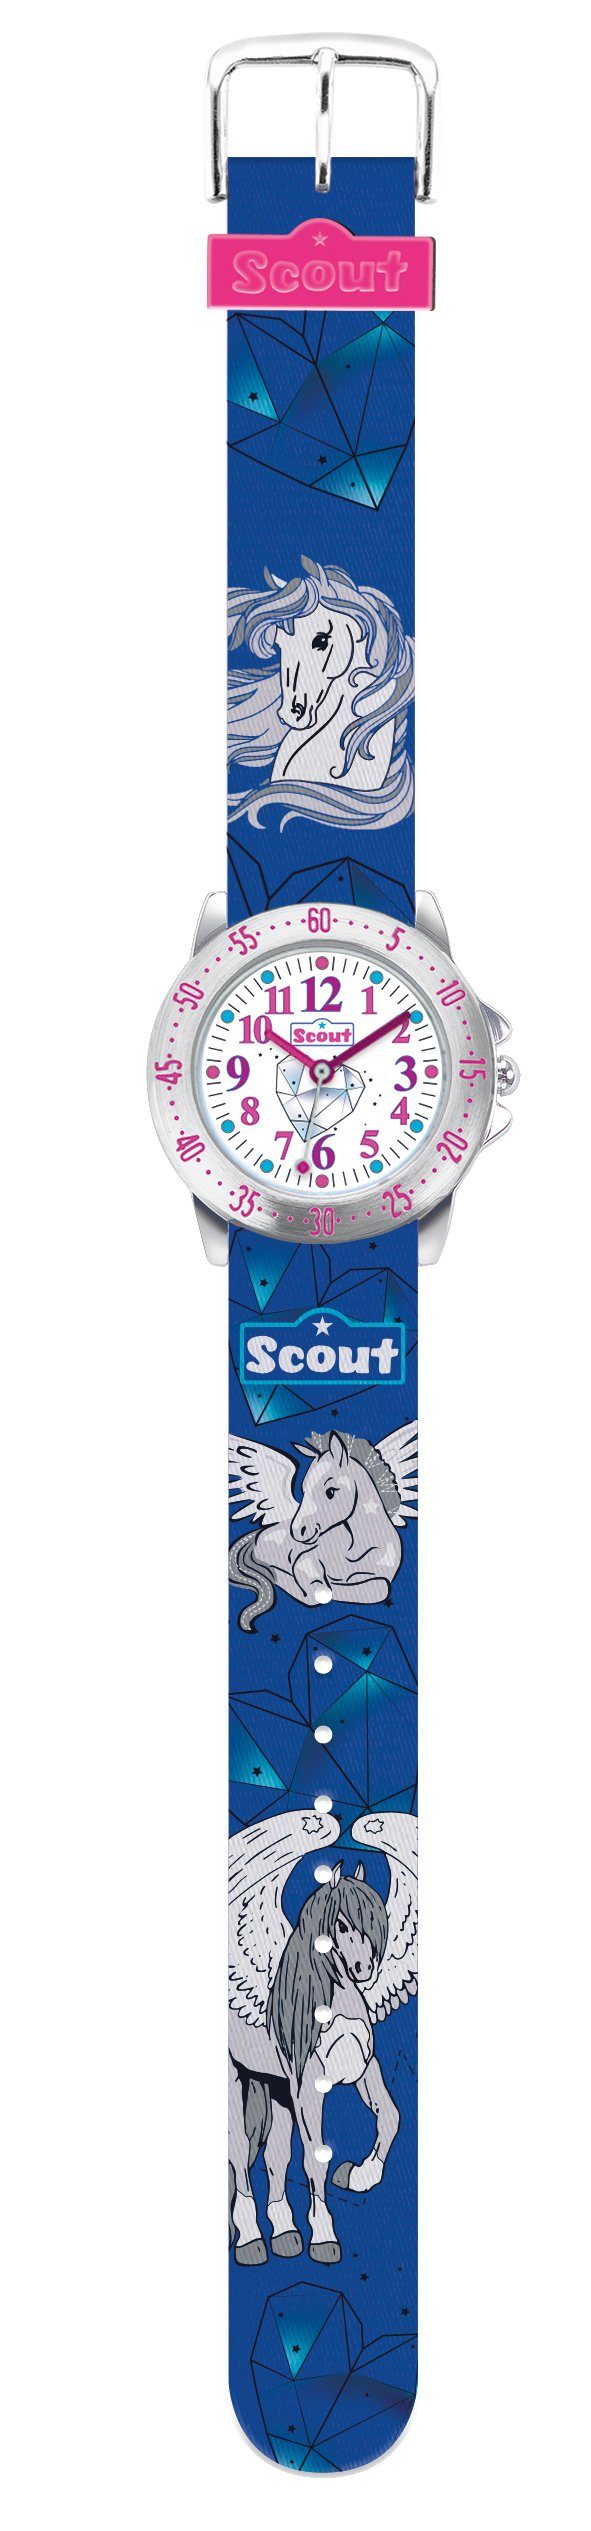 Scout Quarzuhr Kinder Ambanduhr Action Girls Pegasus 280378018, Armband:  Textilarmband blau mit Pegasus (ca. 16 mm)